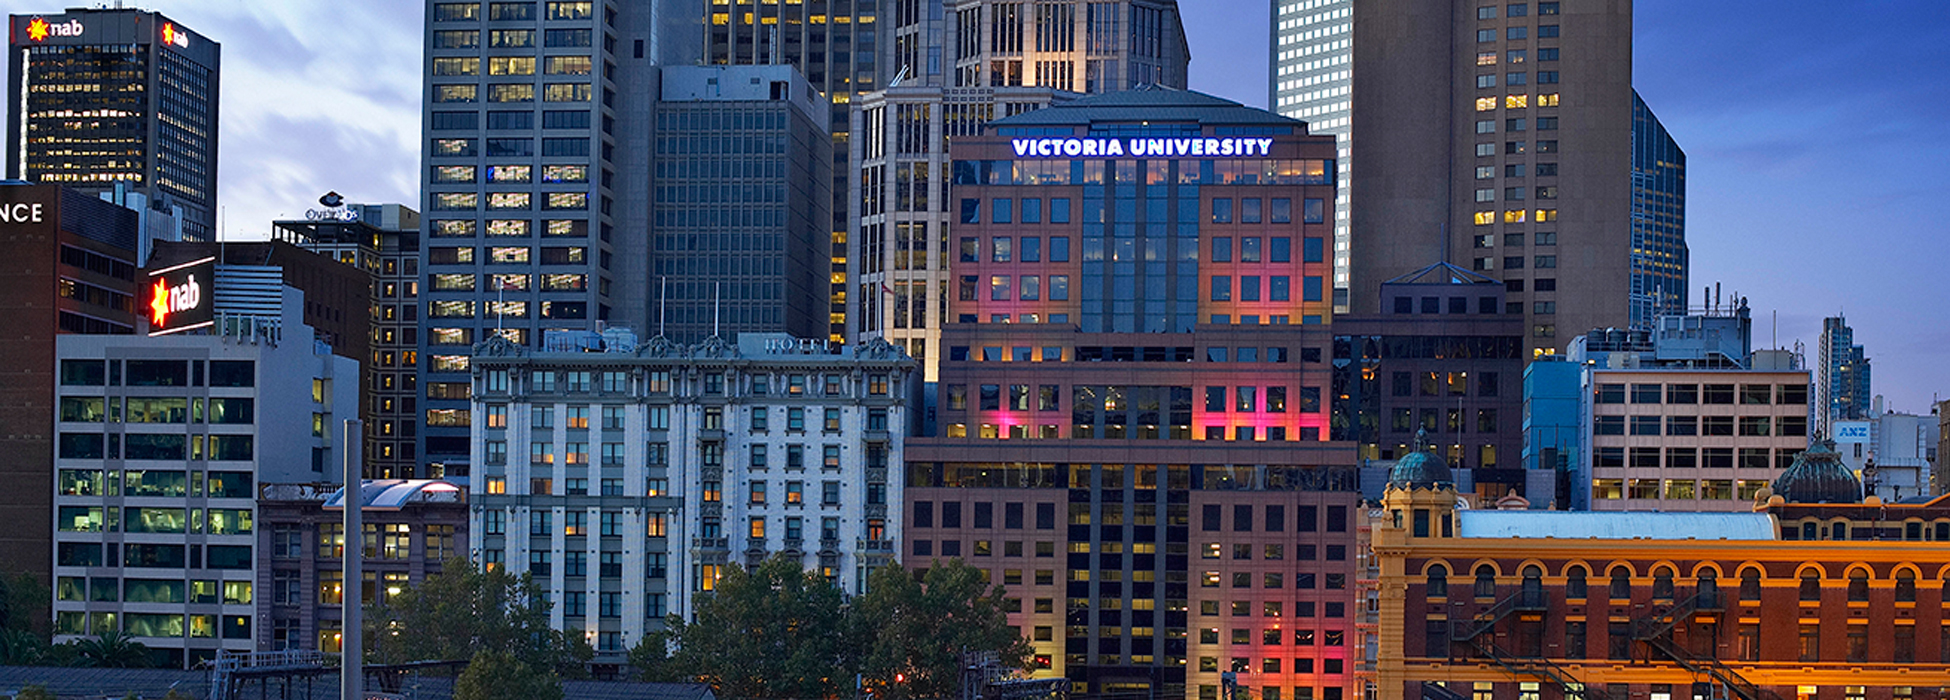 Victoria University [VU]